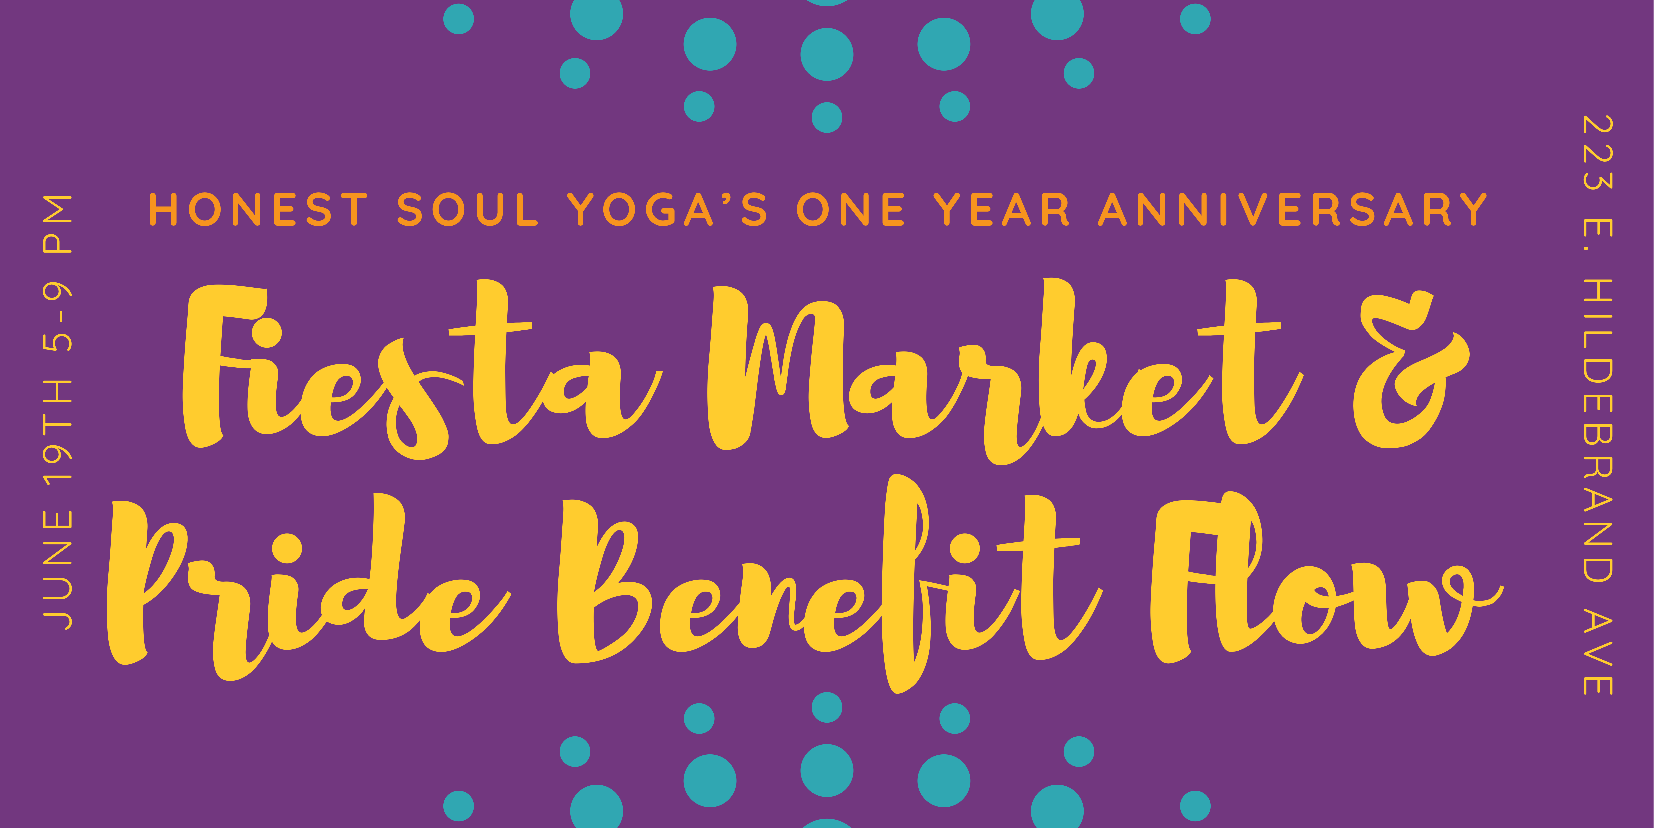 Shop Local Market: Fiesta Edition at Honest Soul Yoga promotional image